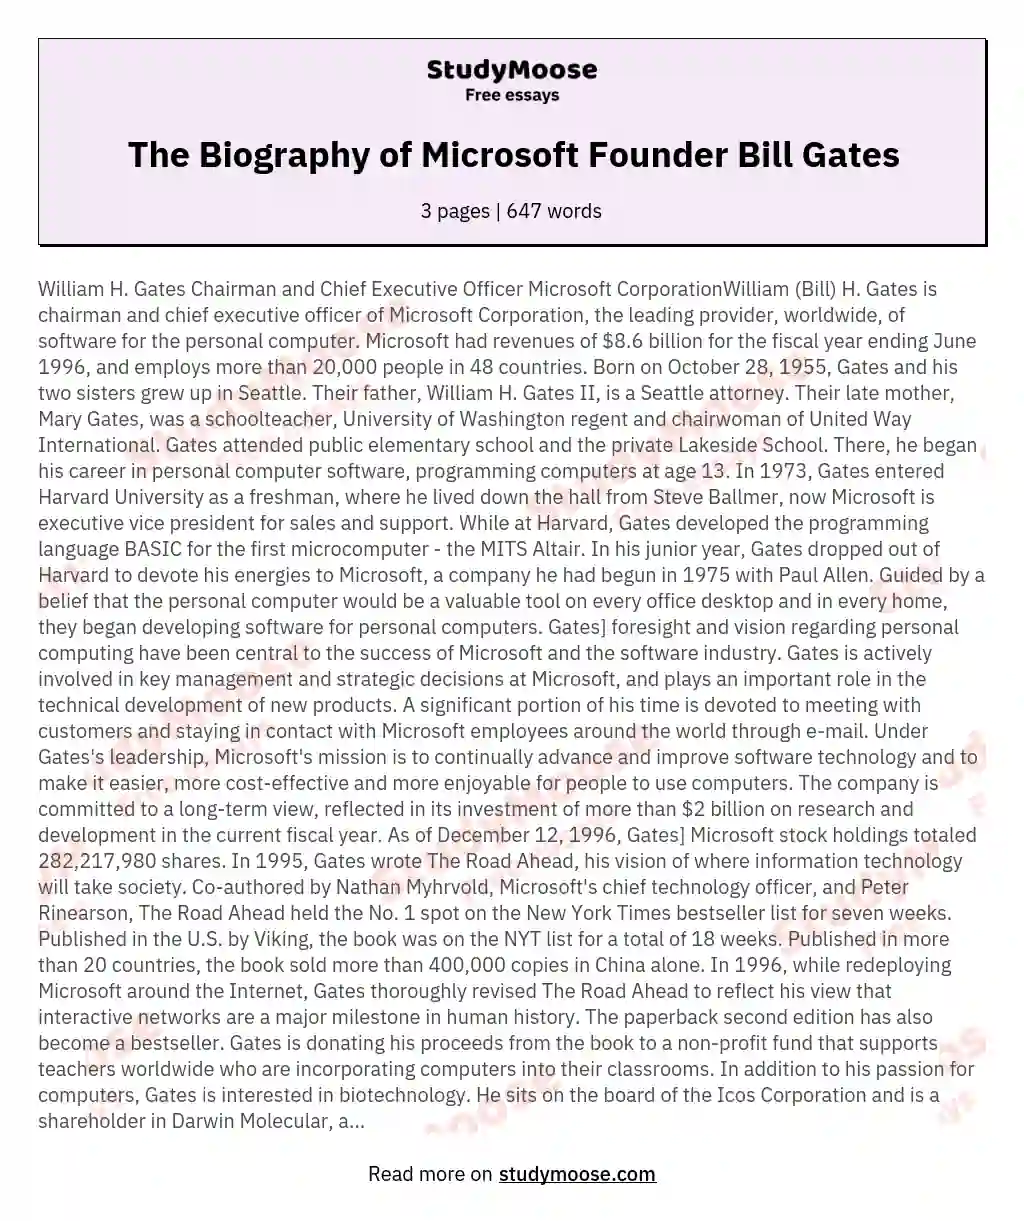 The Biography of Microsoft Founder Bill Gates essay